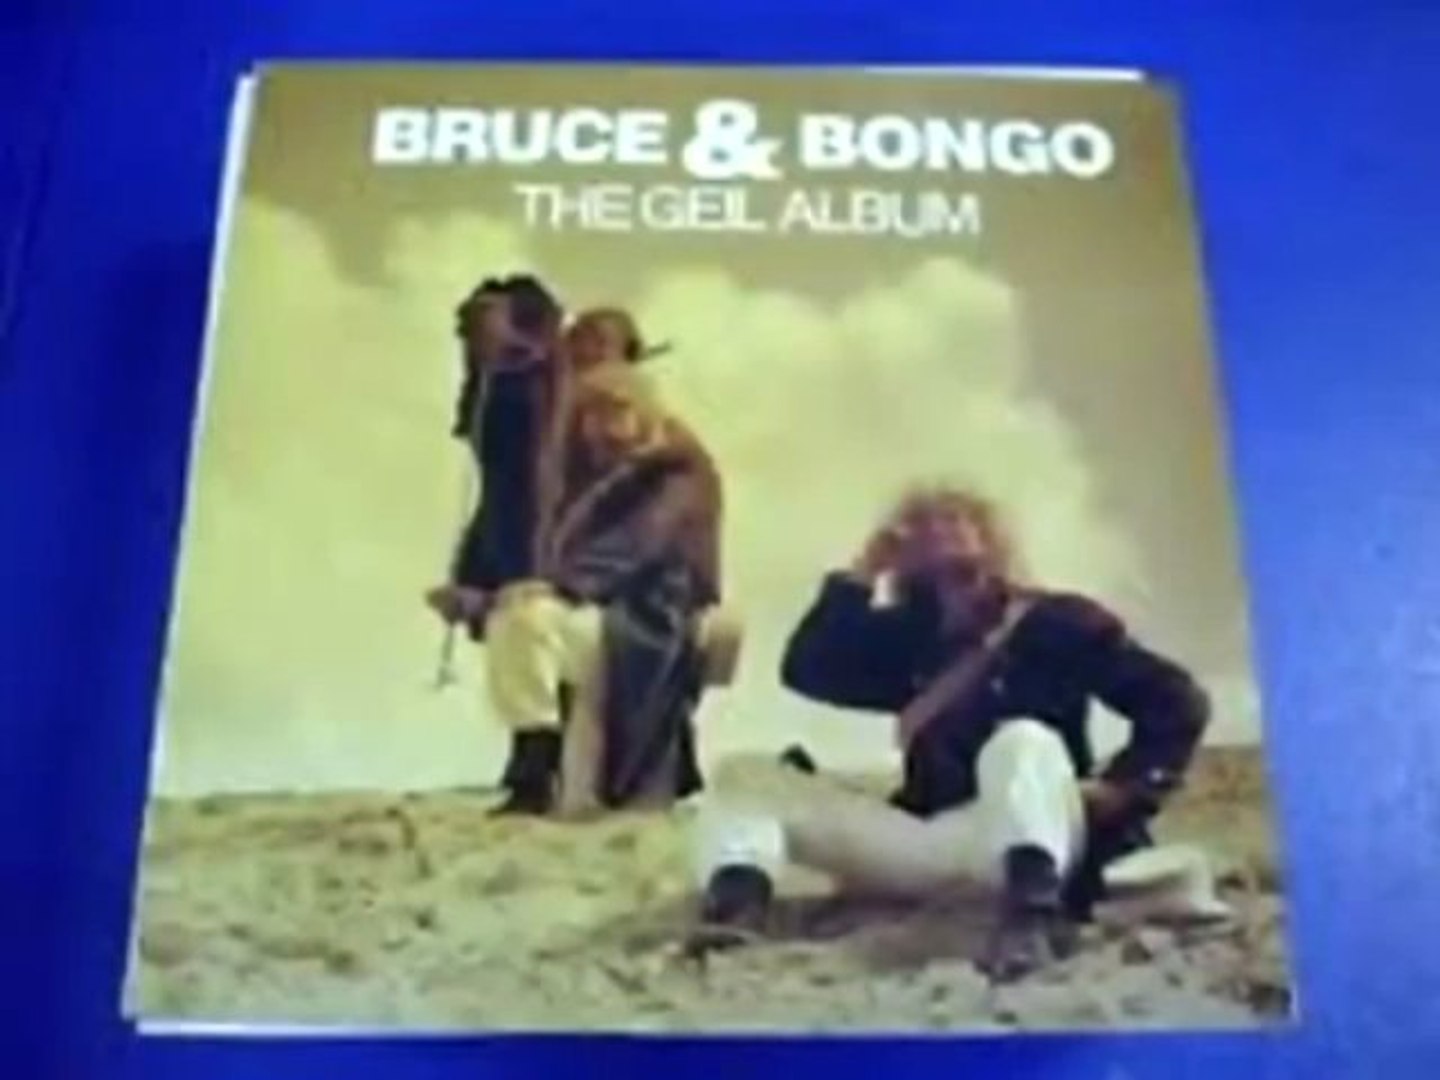 Bruce & Bongo - Geil - Video Dailymotion